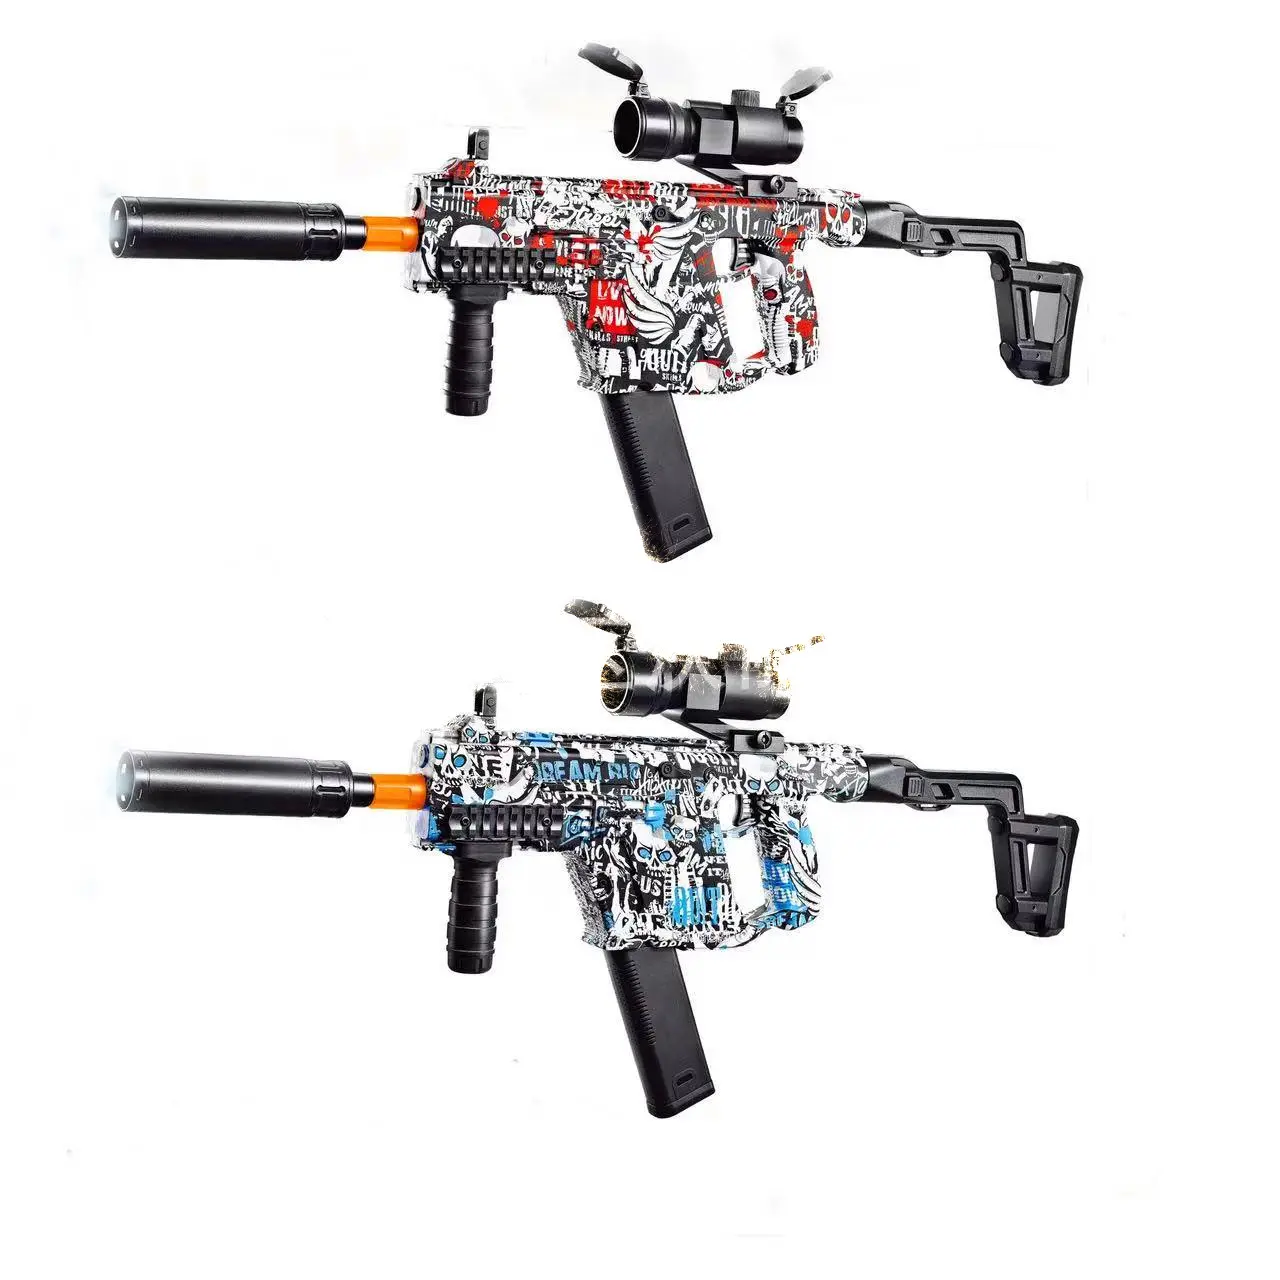 Victor Crystal pellet gun Hot sale on AmazonElectric toy Outdoor water gun for children A barrage of submachine guns